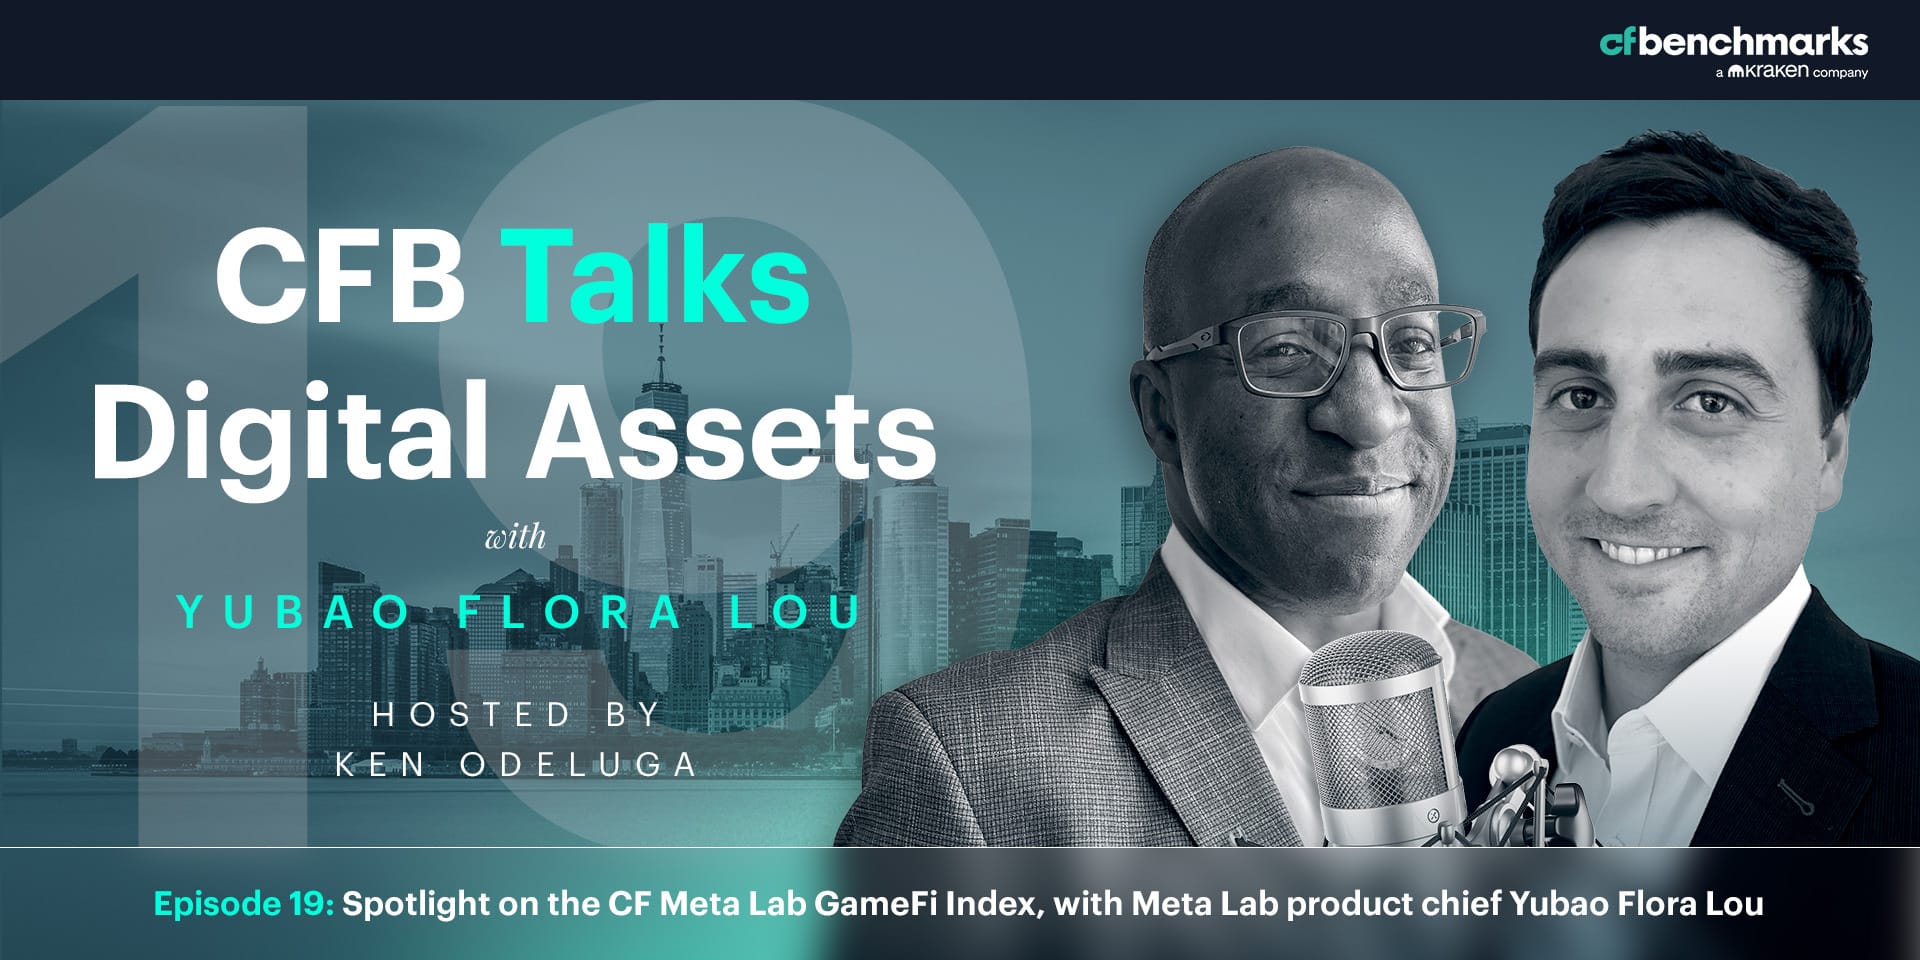 CFB Talks Digital Assets Episode 19: Spotlight on the CF Meta Lab GameFi Index, with Meta Lab product chief Yubao Flora Lou